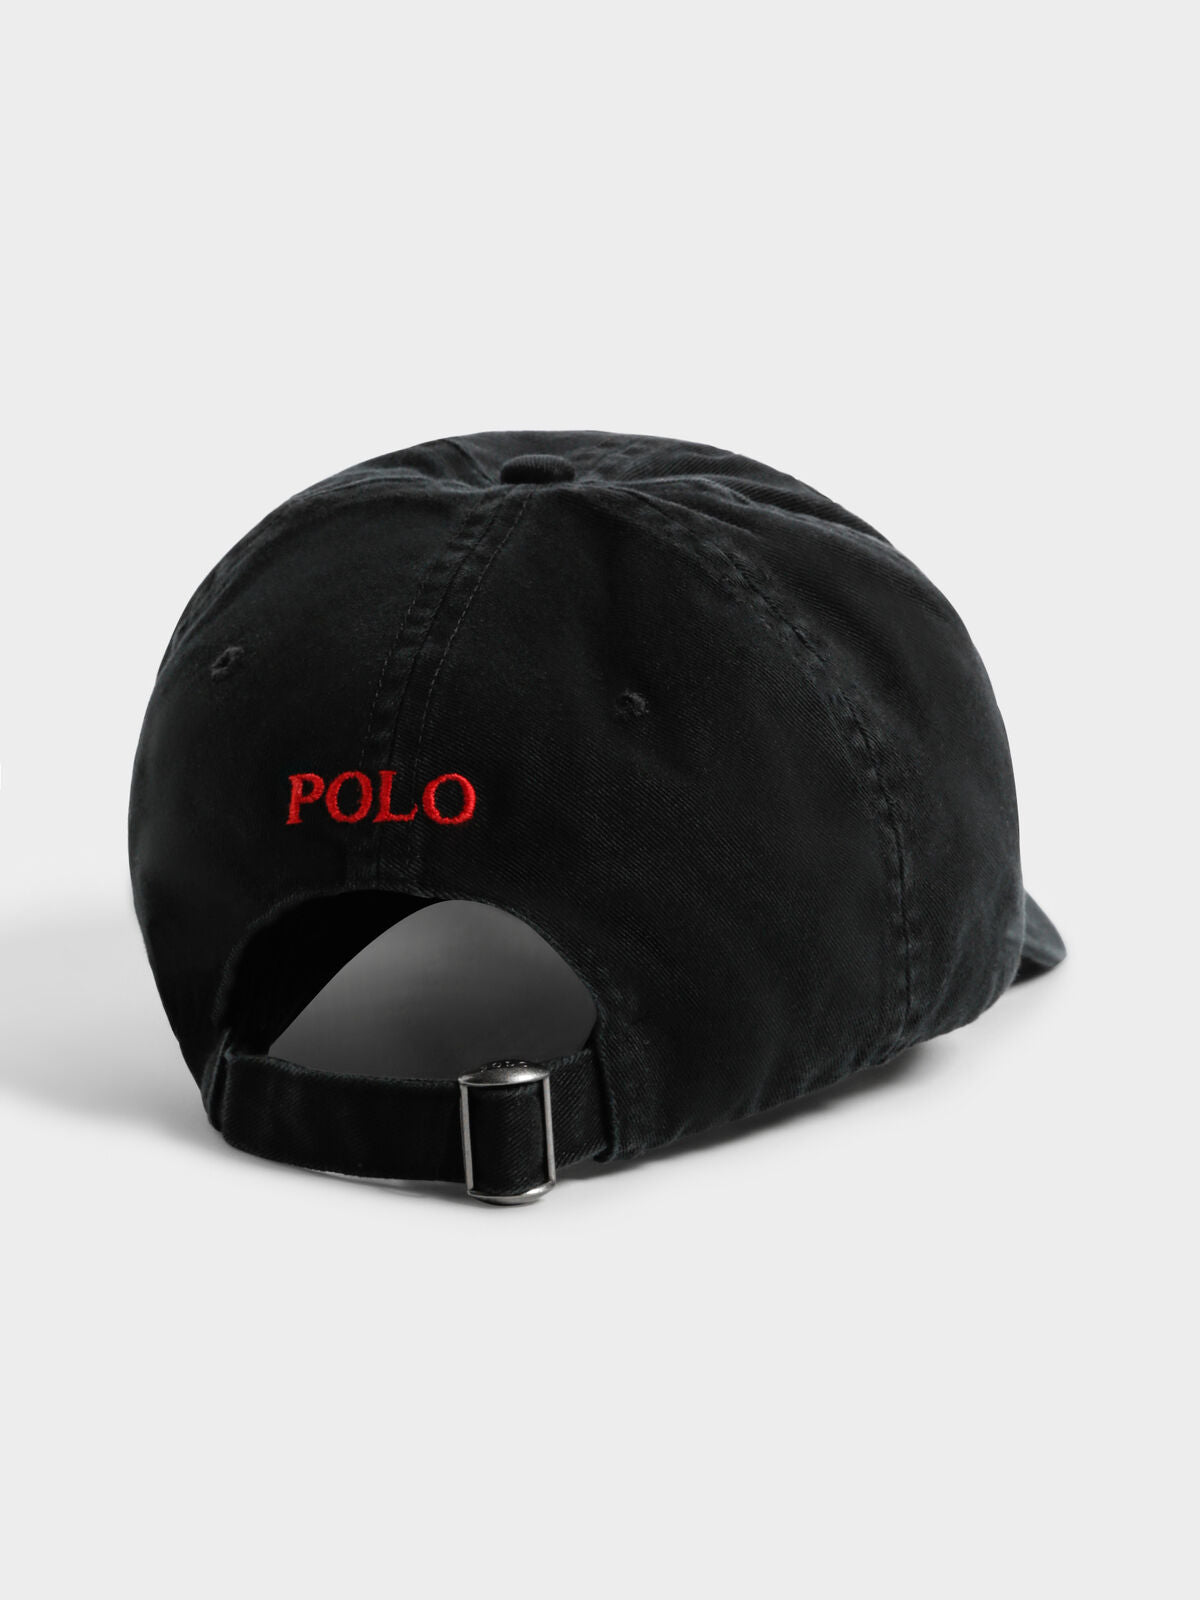 Polo Chino Baseball Cap in Black